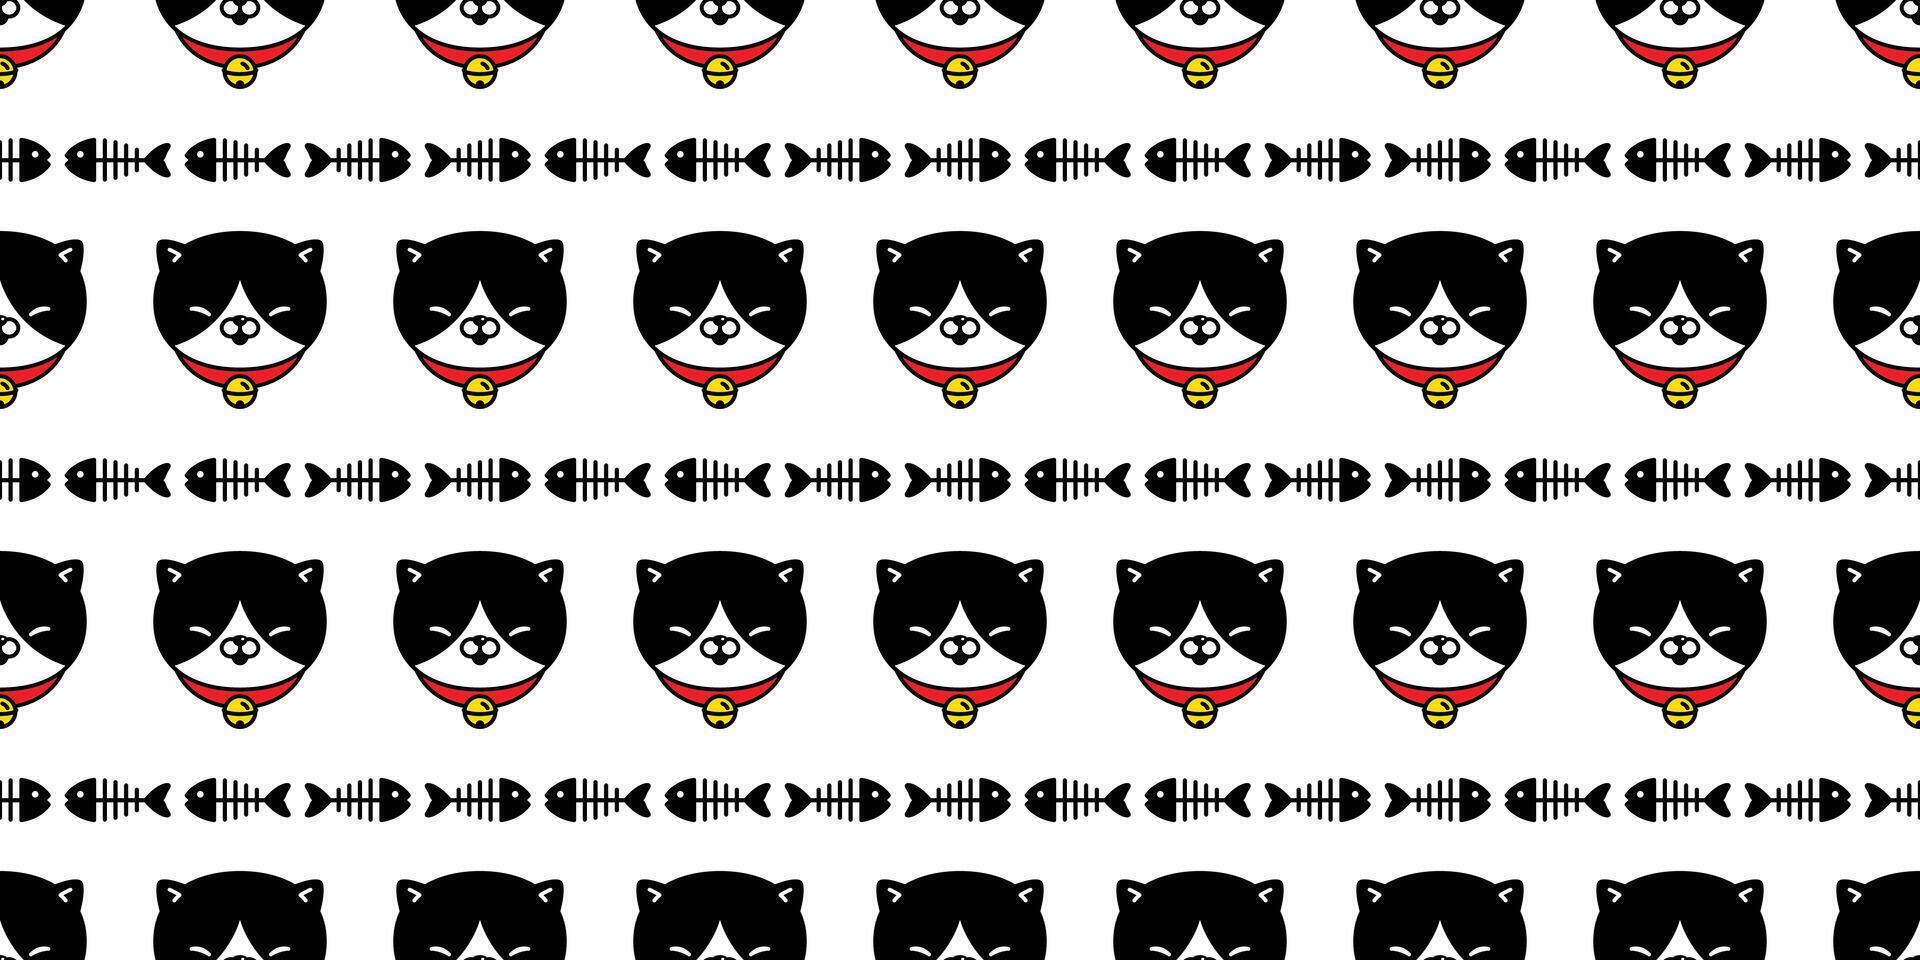 cat seamless pattern kitten vector fish bone collar scarf isolated repeat background tile wallpaper cartoon doodle illustration design